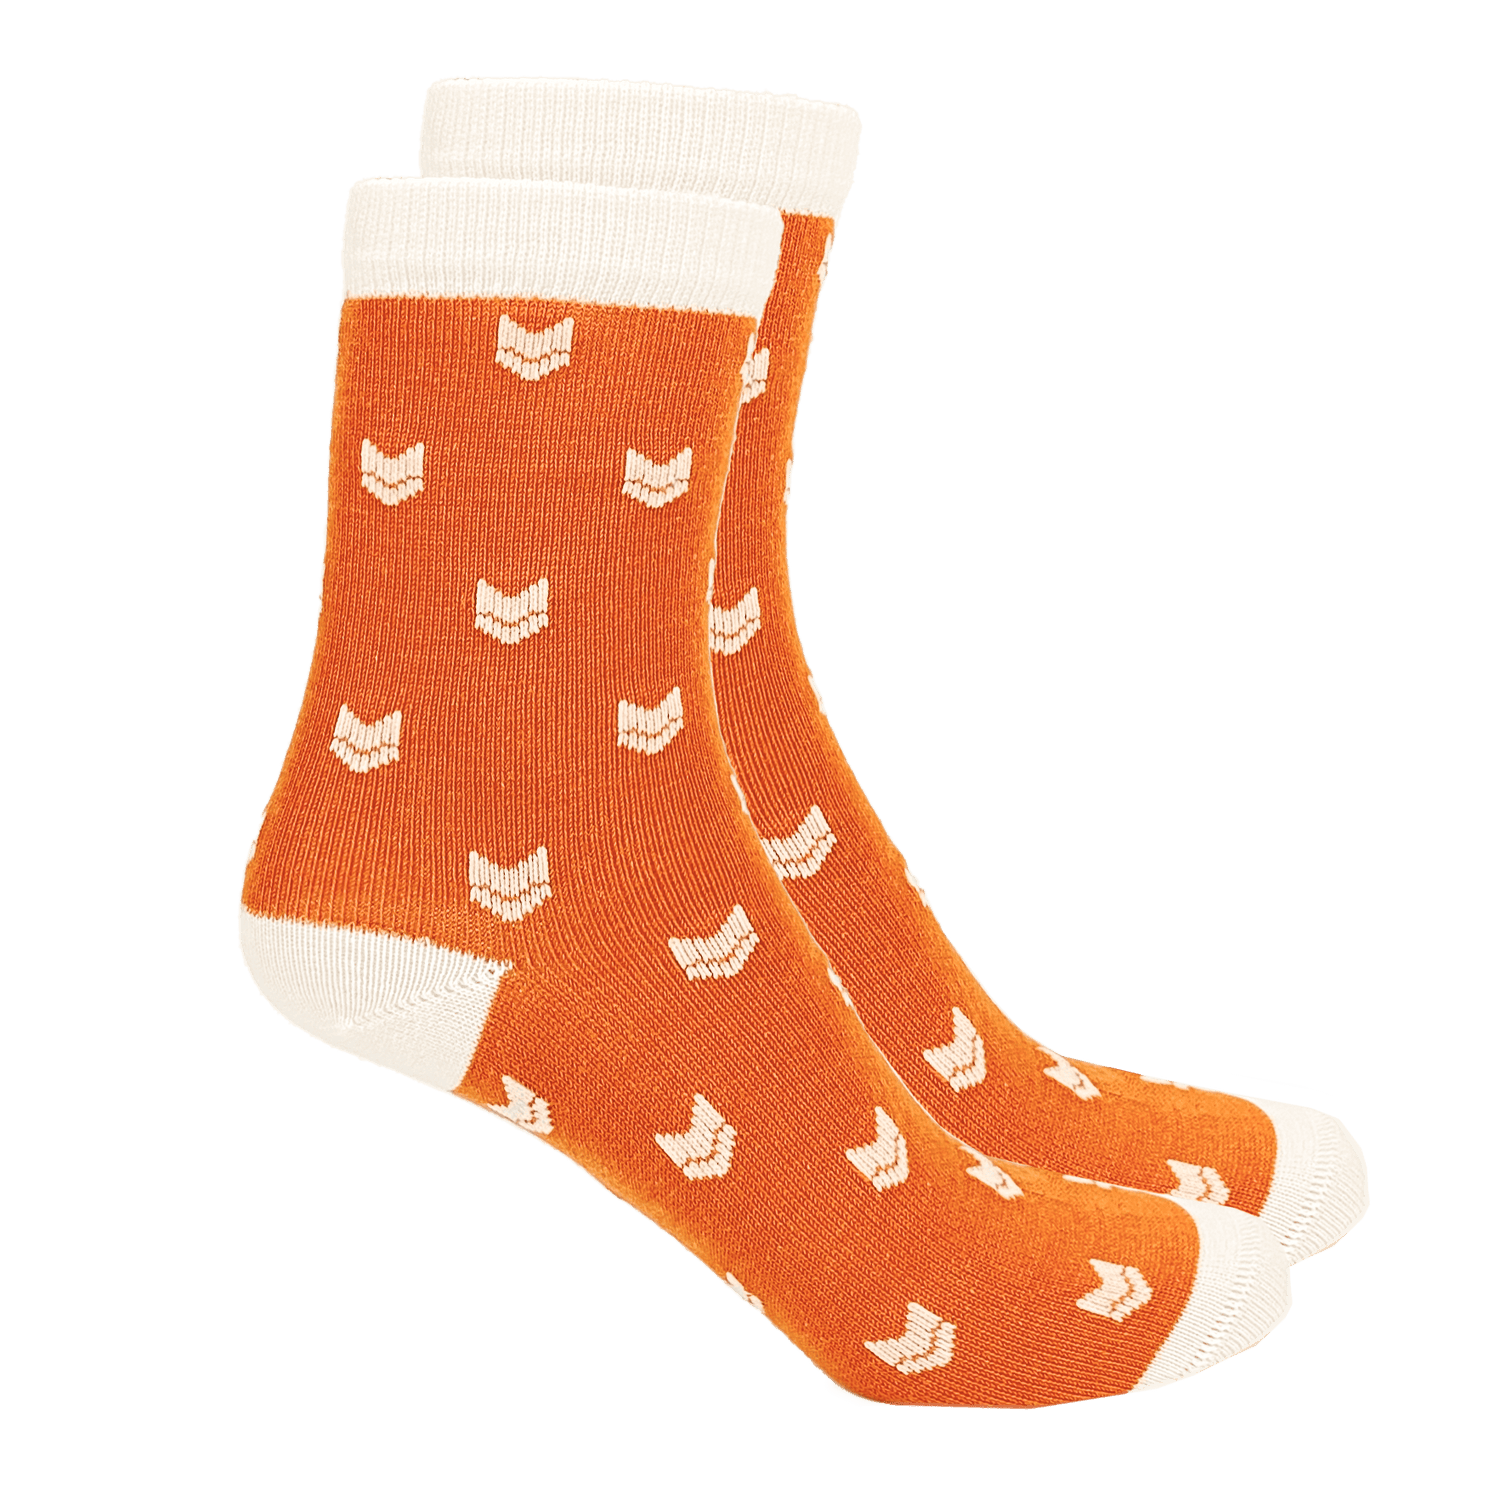 VAI-KØ Logo Socks - Merino Wool Toasty Brown Socks